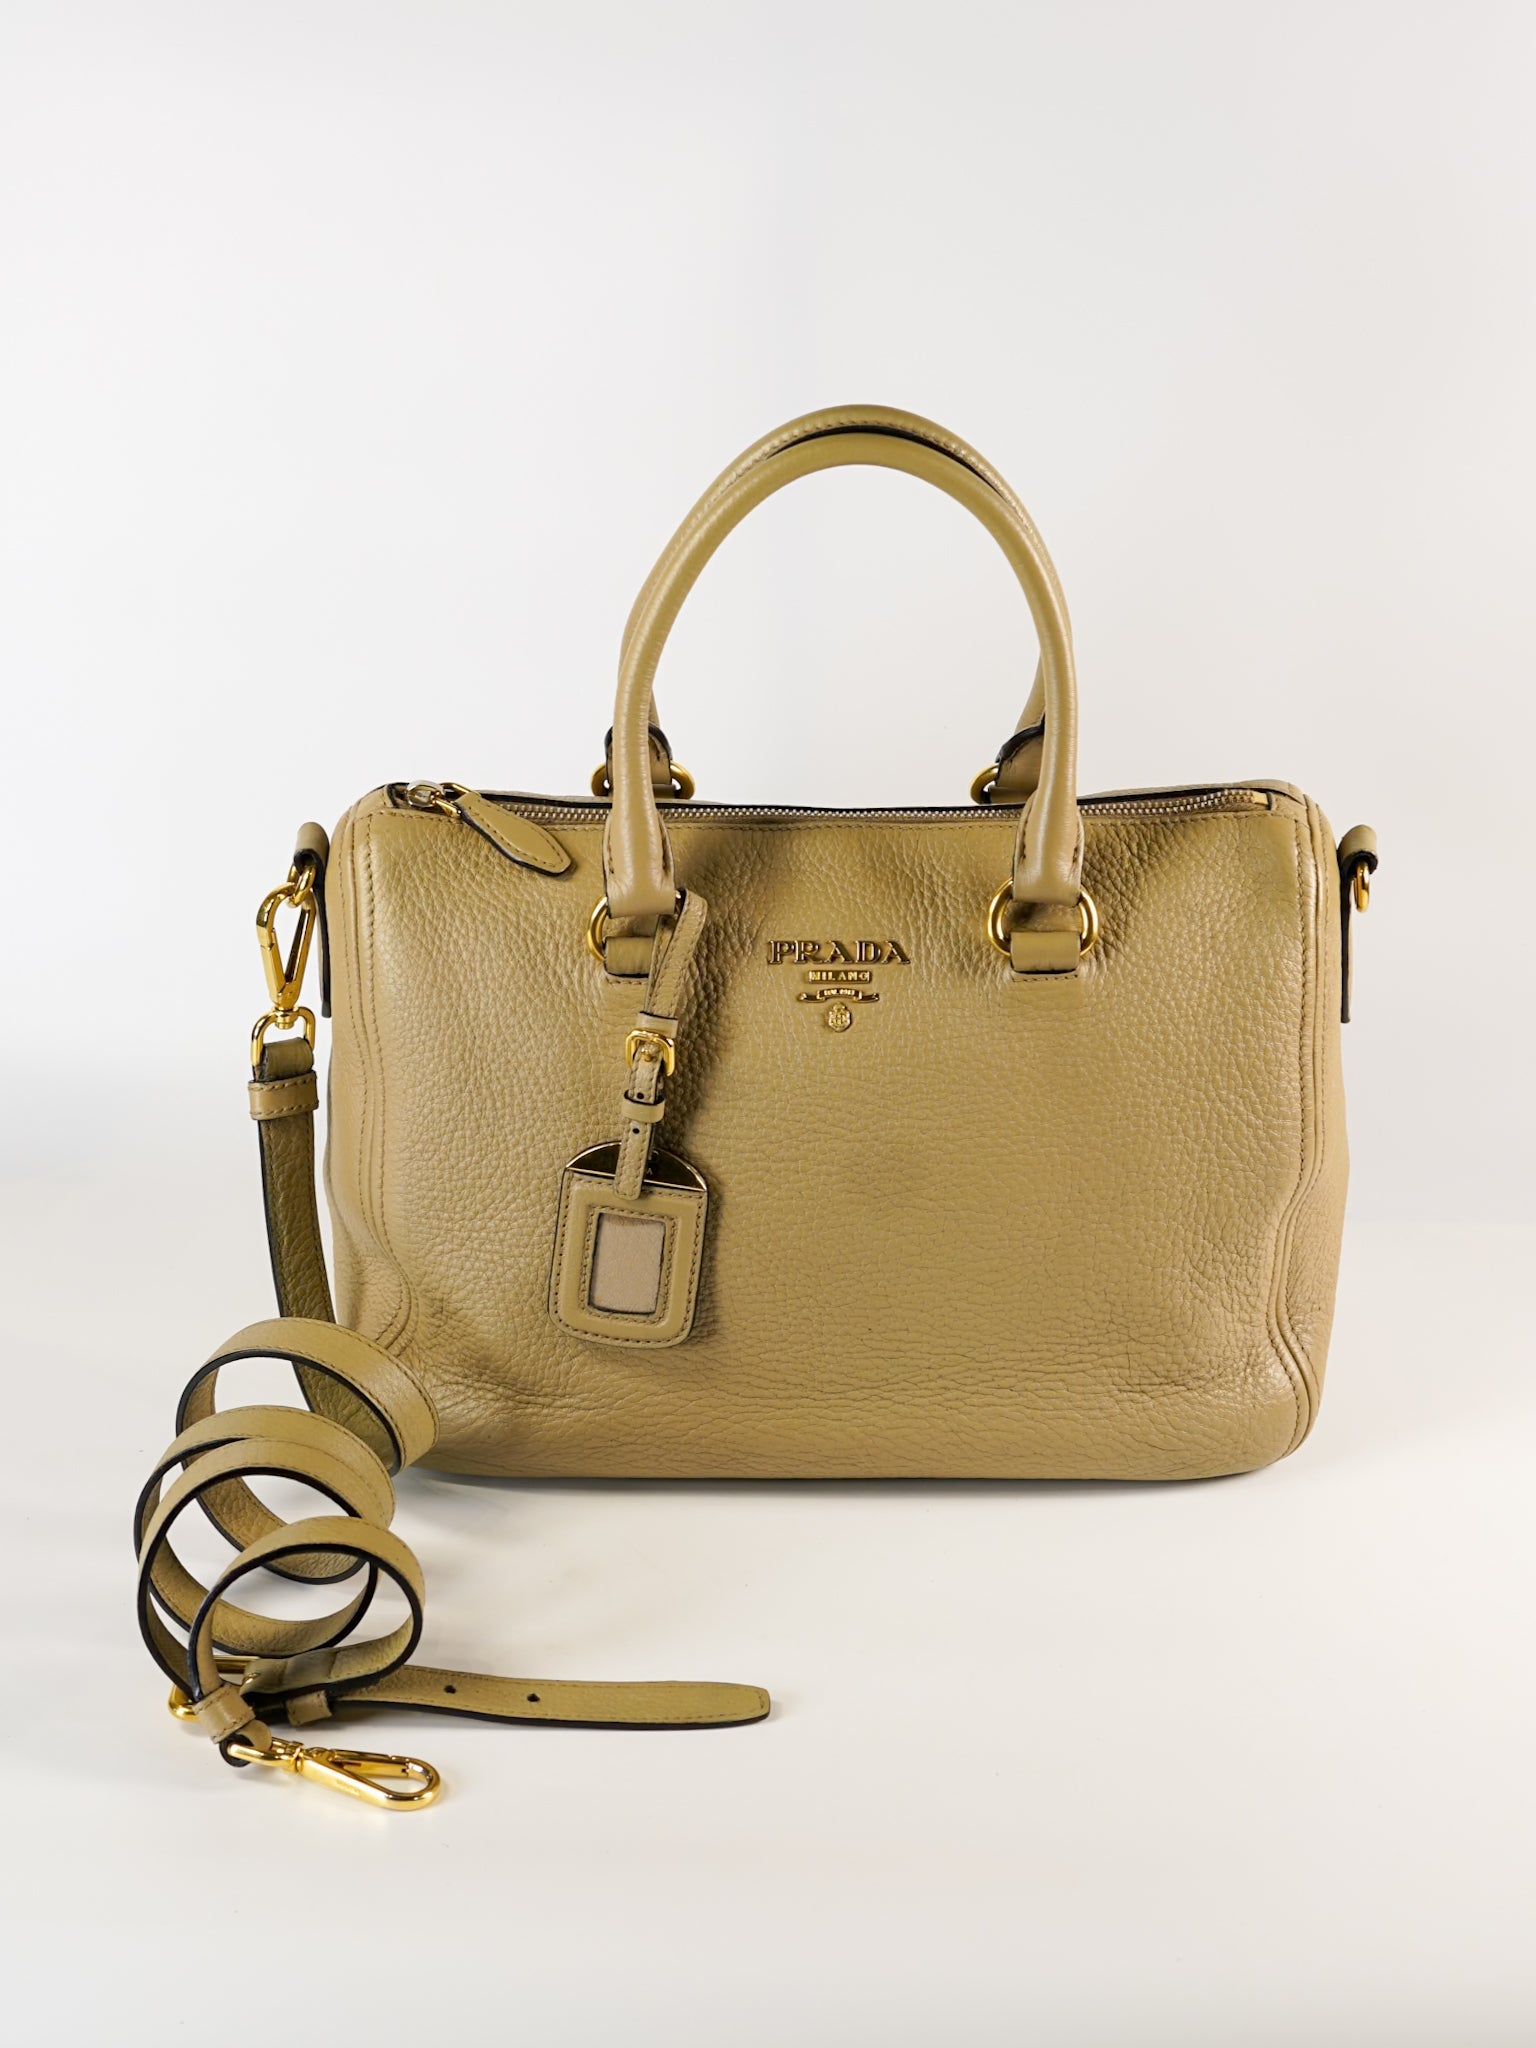 Argilla Vitello Phenix Leather Bauletto Bag in Gold Hardware | Purse Maison Luxury Bags Shop